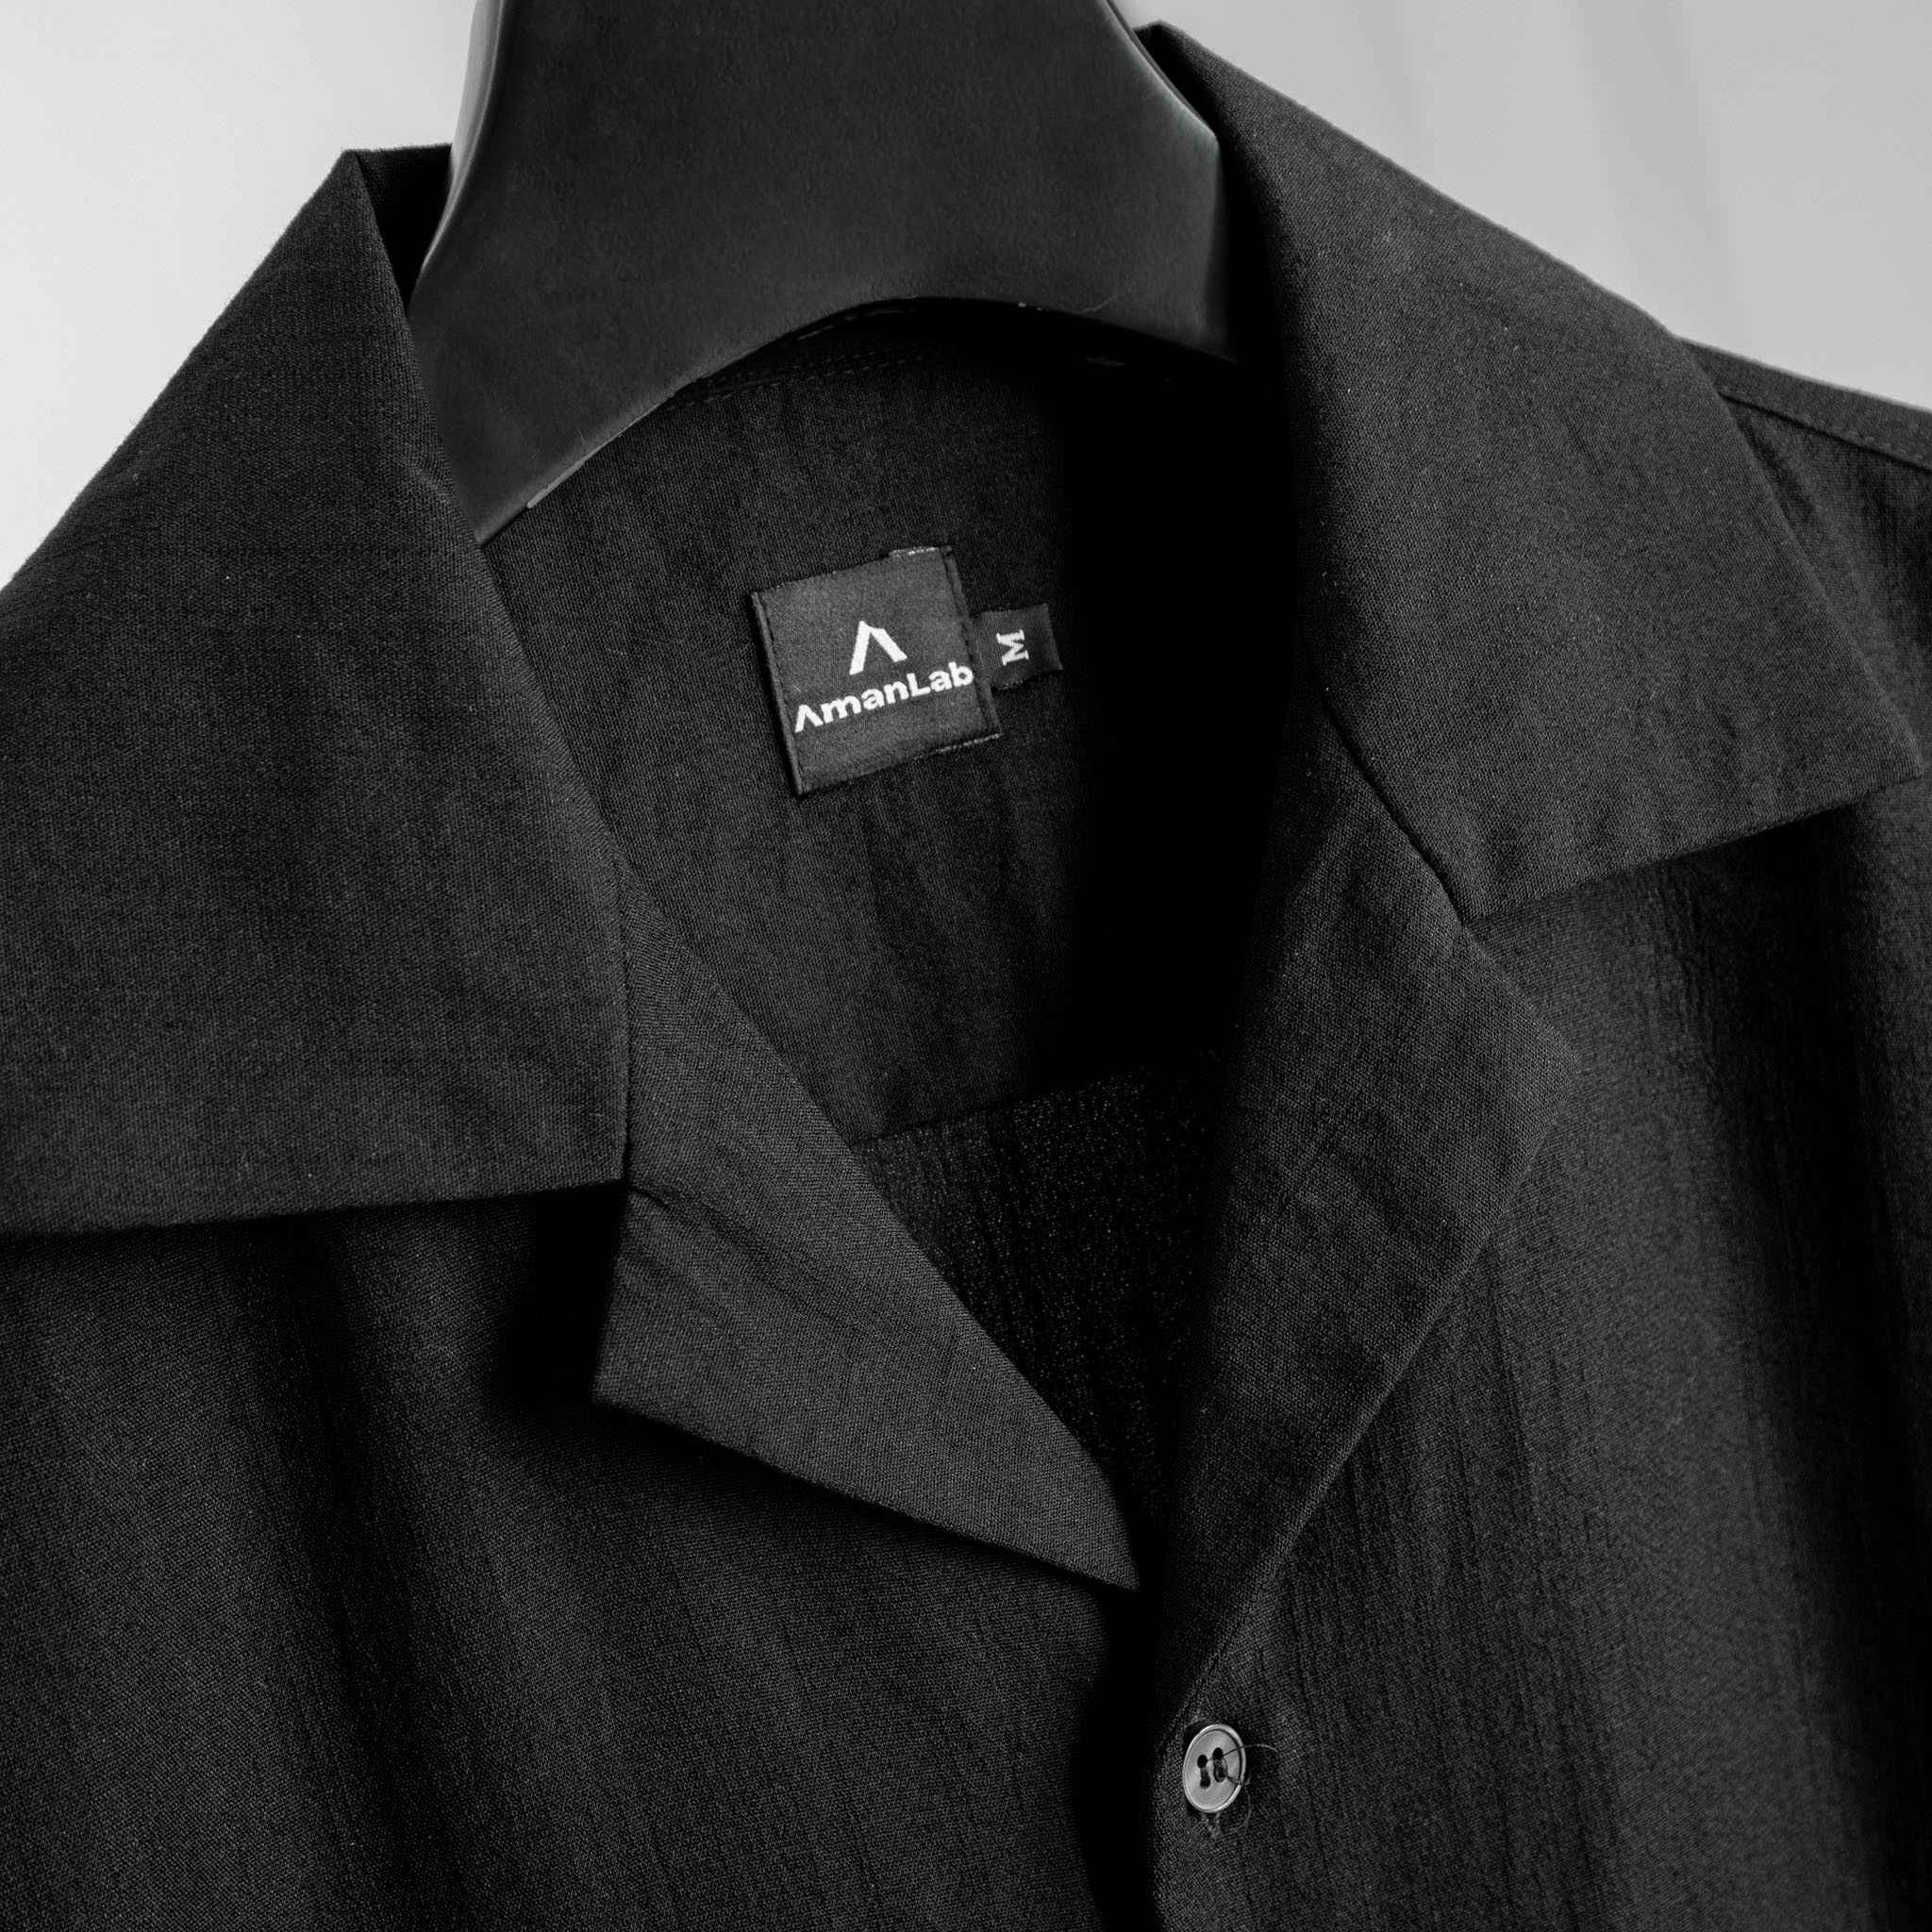 Áo sơ mi nam ngắn tay vải đũi linen xước, thiết kế cổ danton, cổ vest, form regular Linen Danton AMANLAB